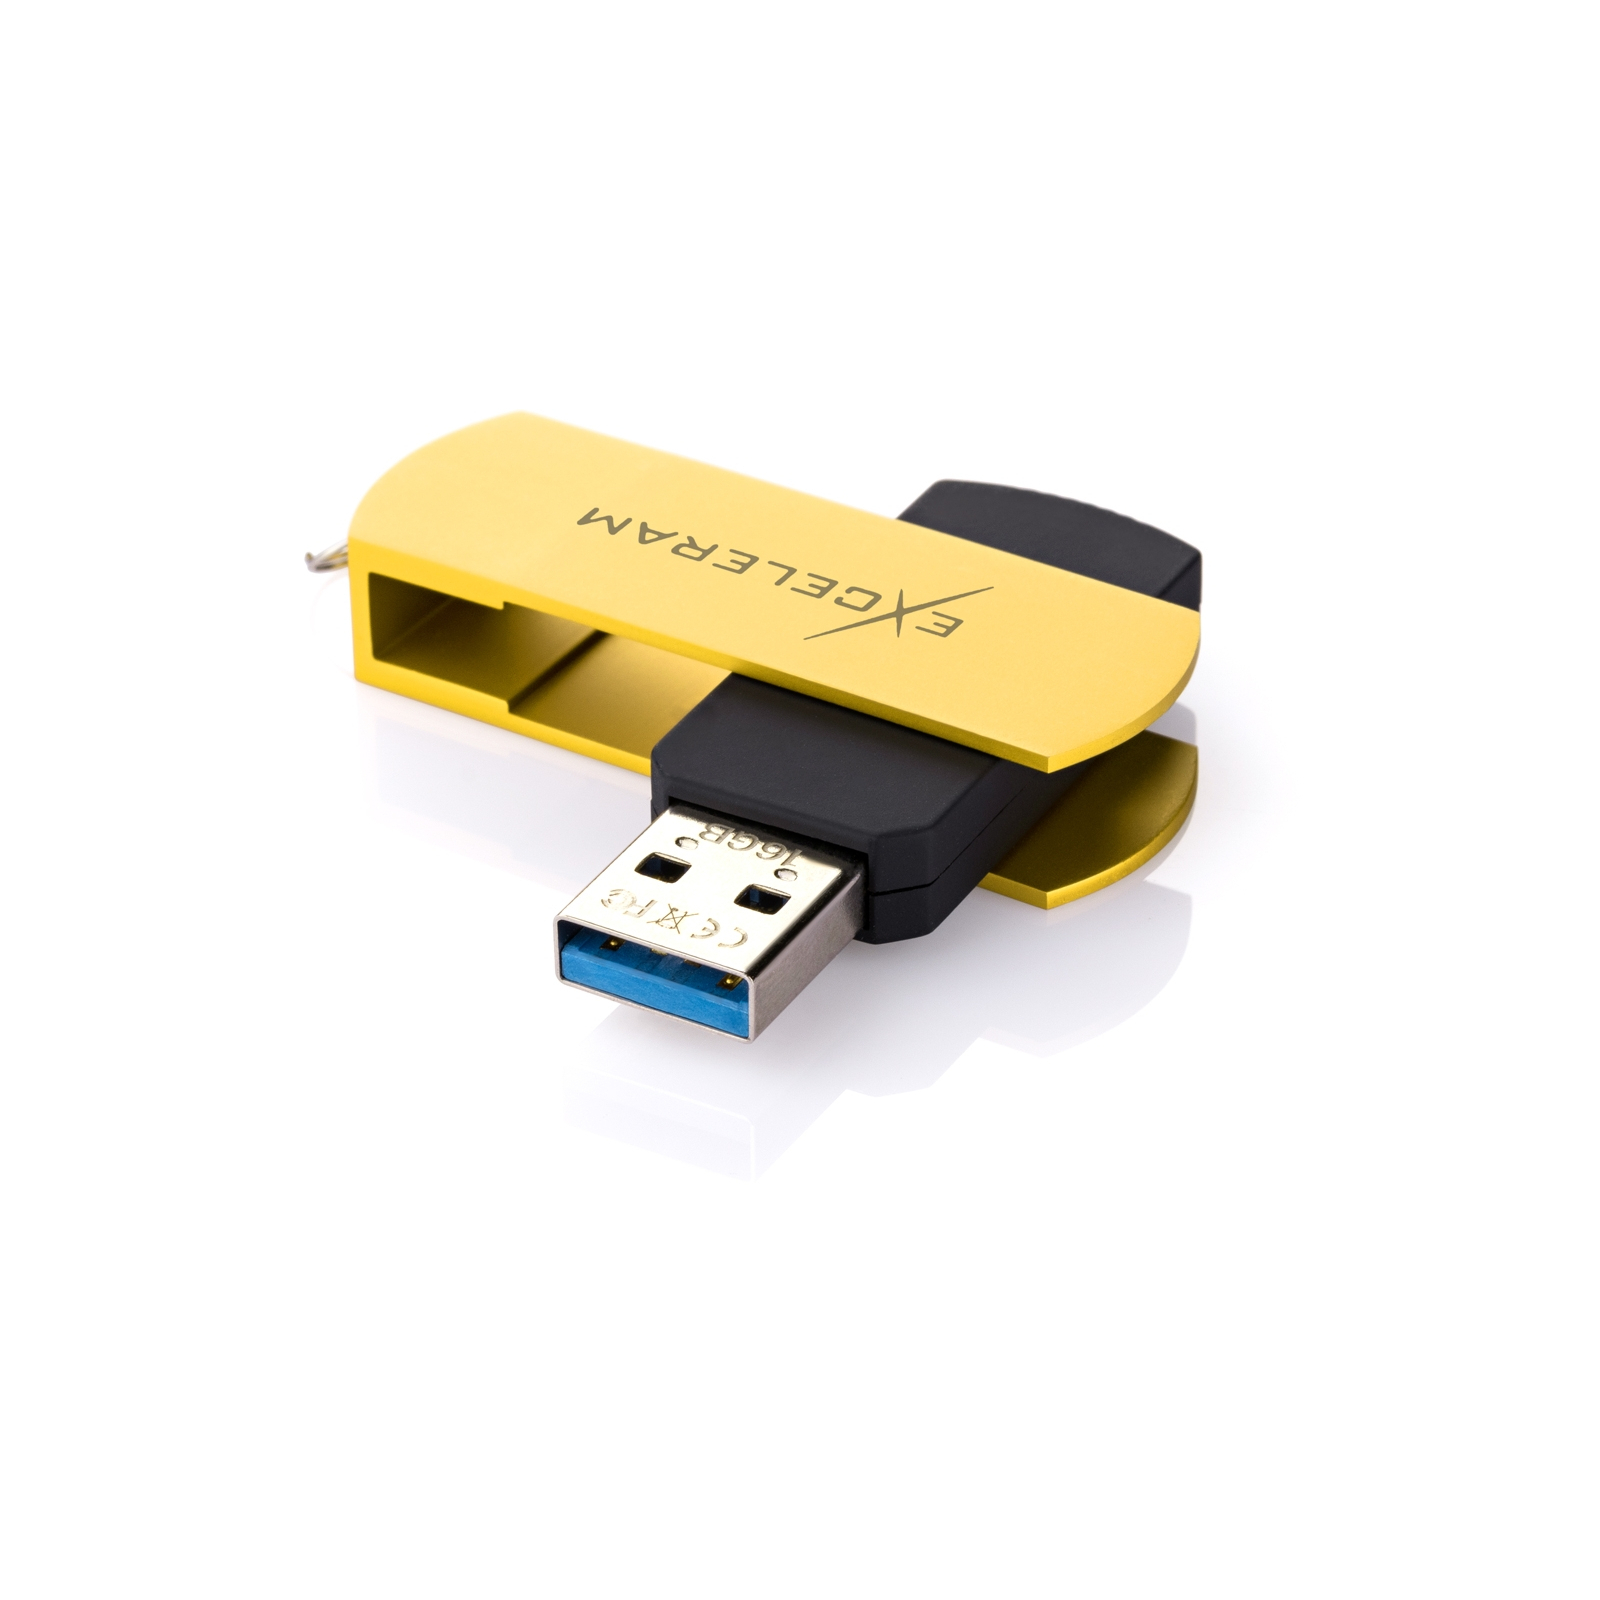 USB флеш накопитель eXceleram 16GB P2 Series Brown/Black USB 3.1 Gen 1 (EXP2U3BRB16) изображение 2